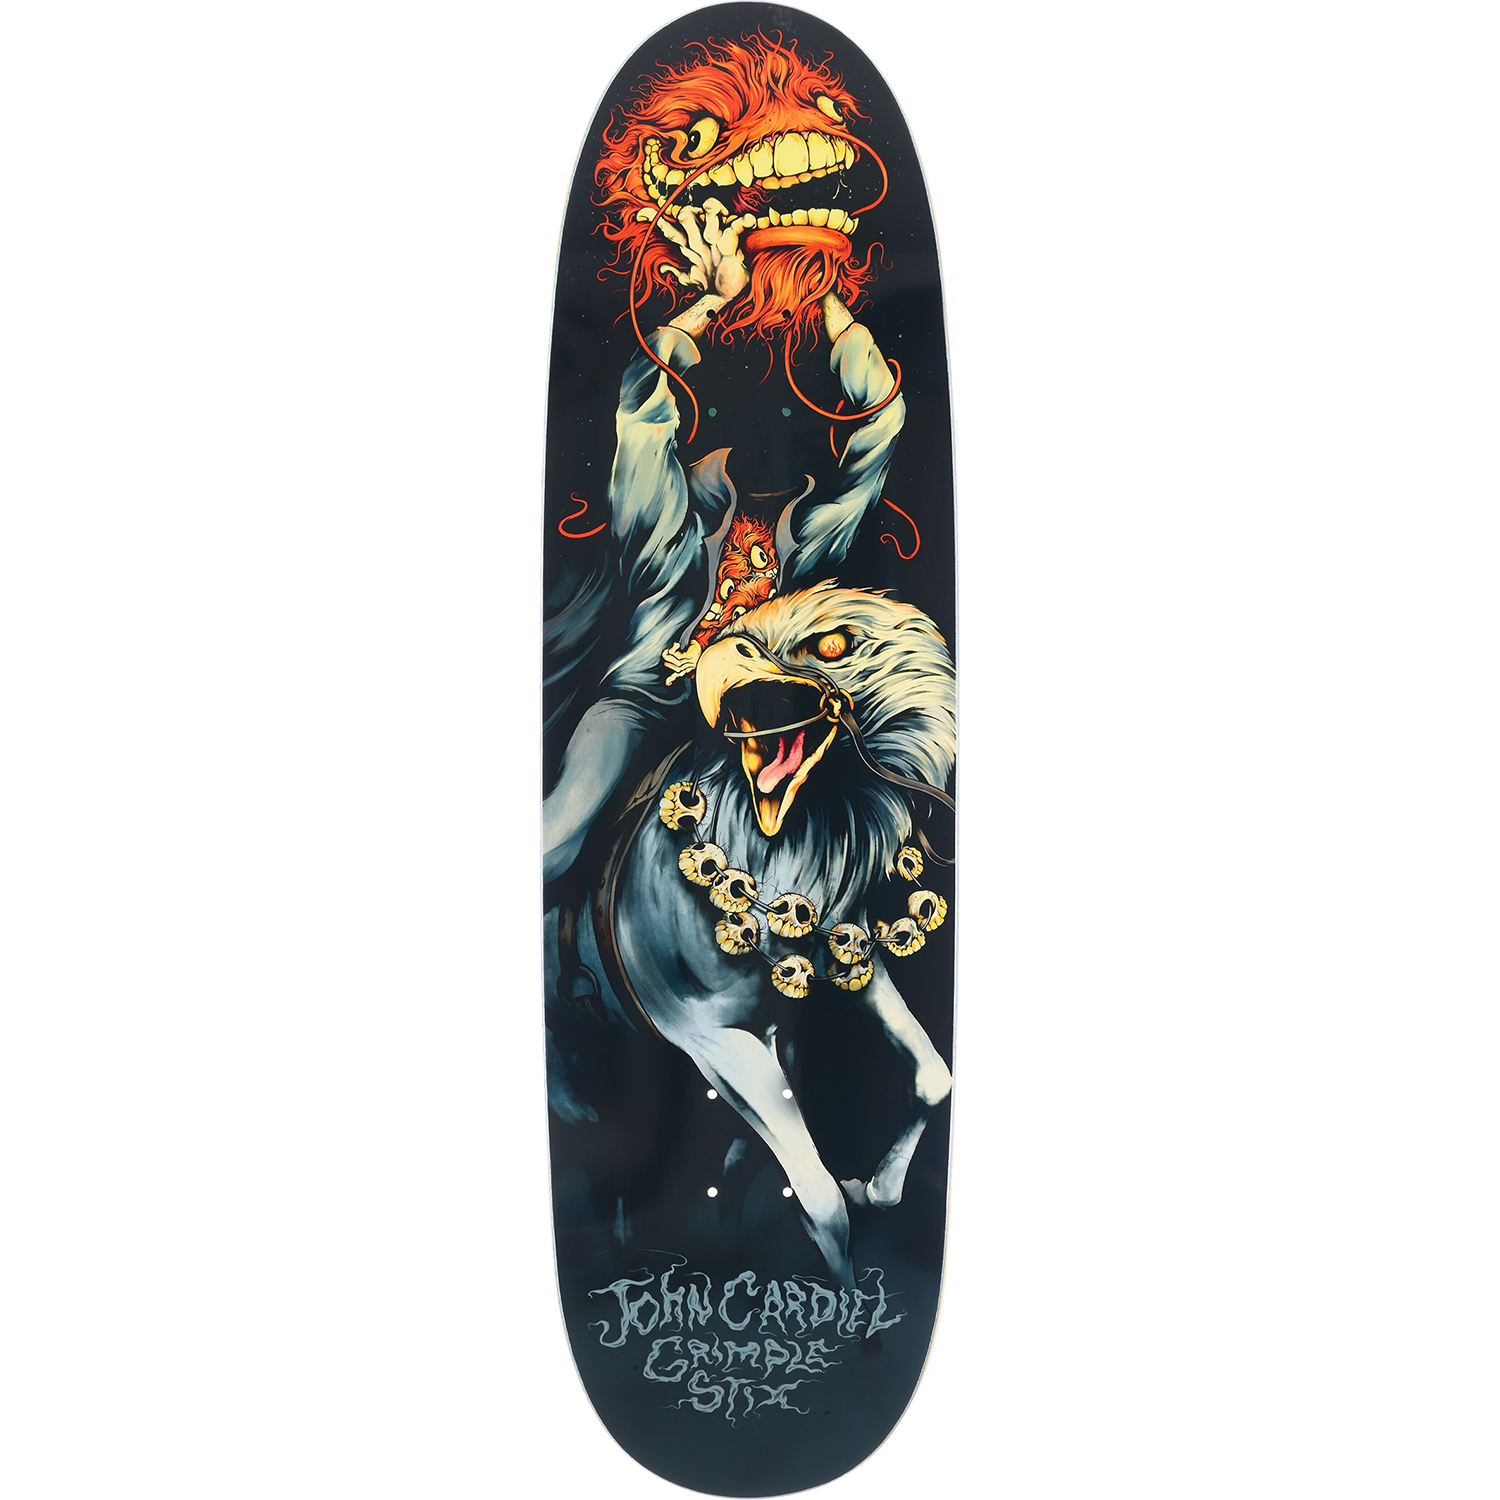 Anti-Hero Skateboard Deck Cardiel Grimple 9.18" - Invisible Board Shop